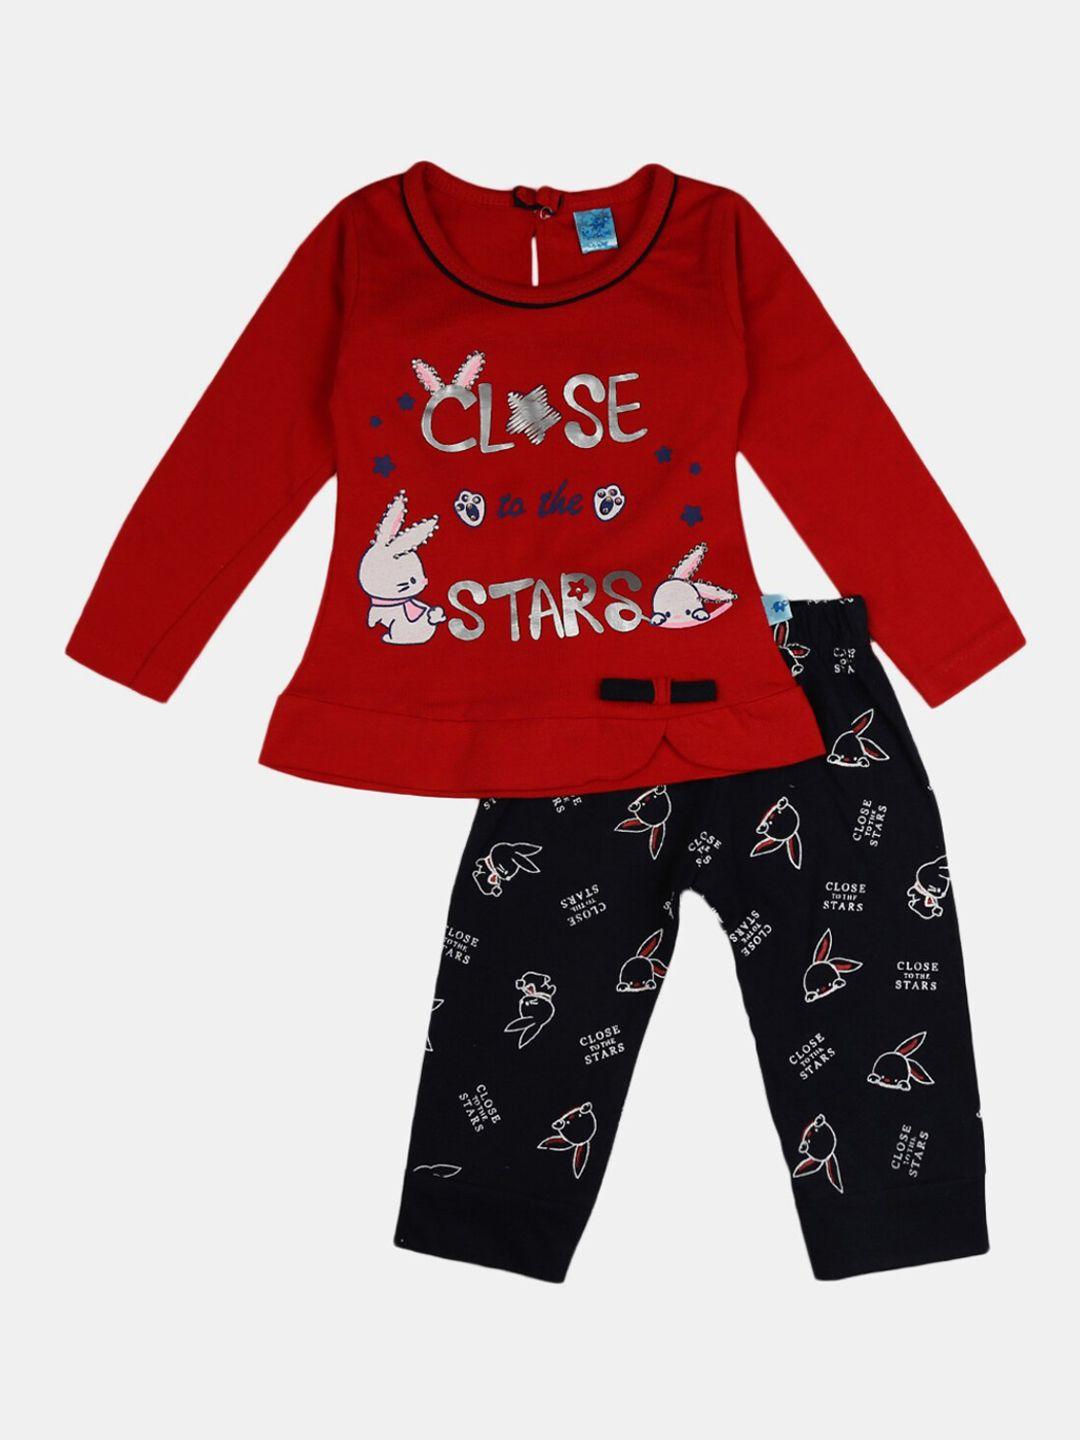 v-mart-unisex-kids-red-clothing-set